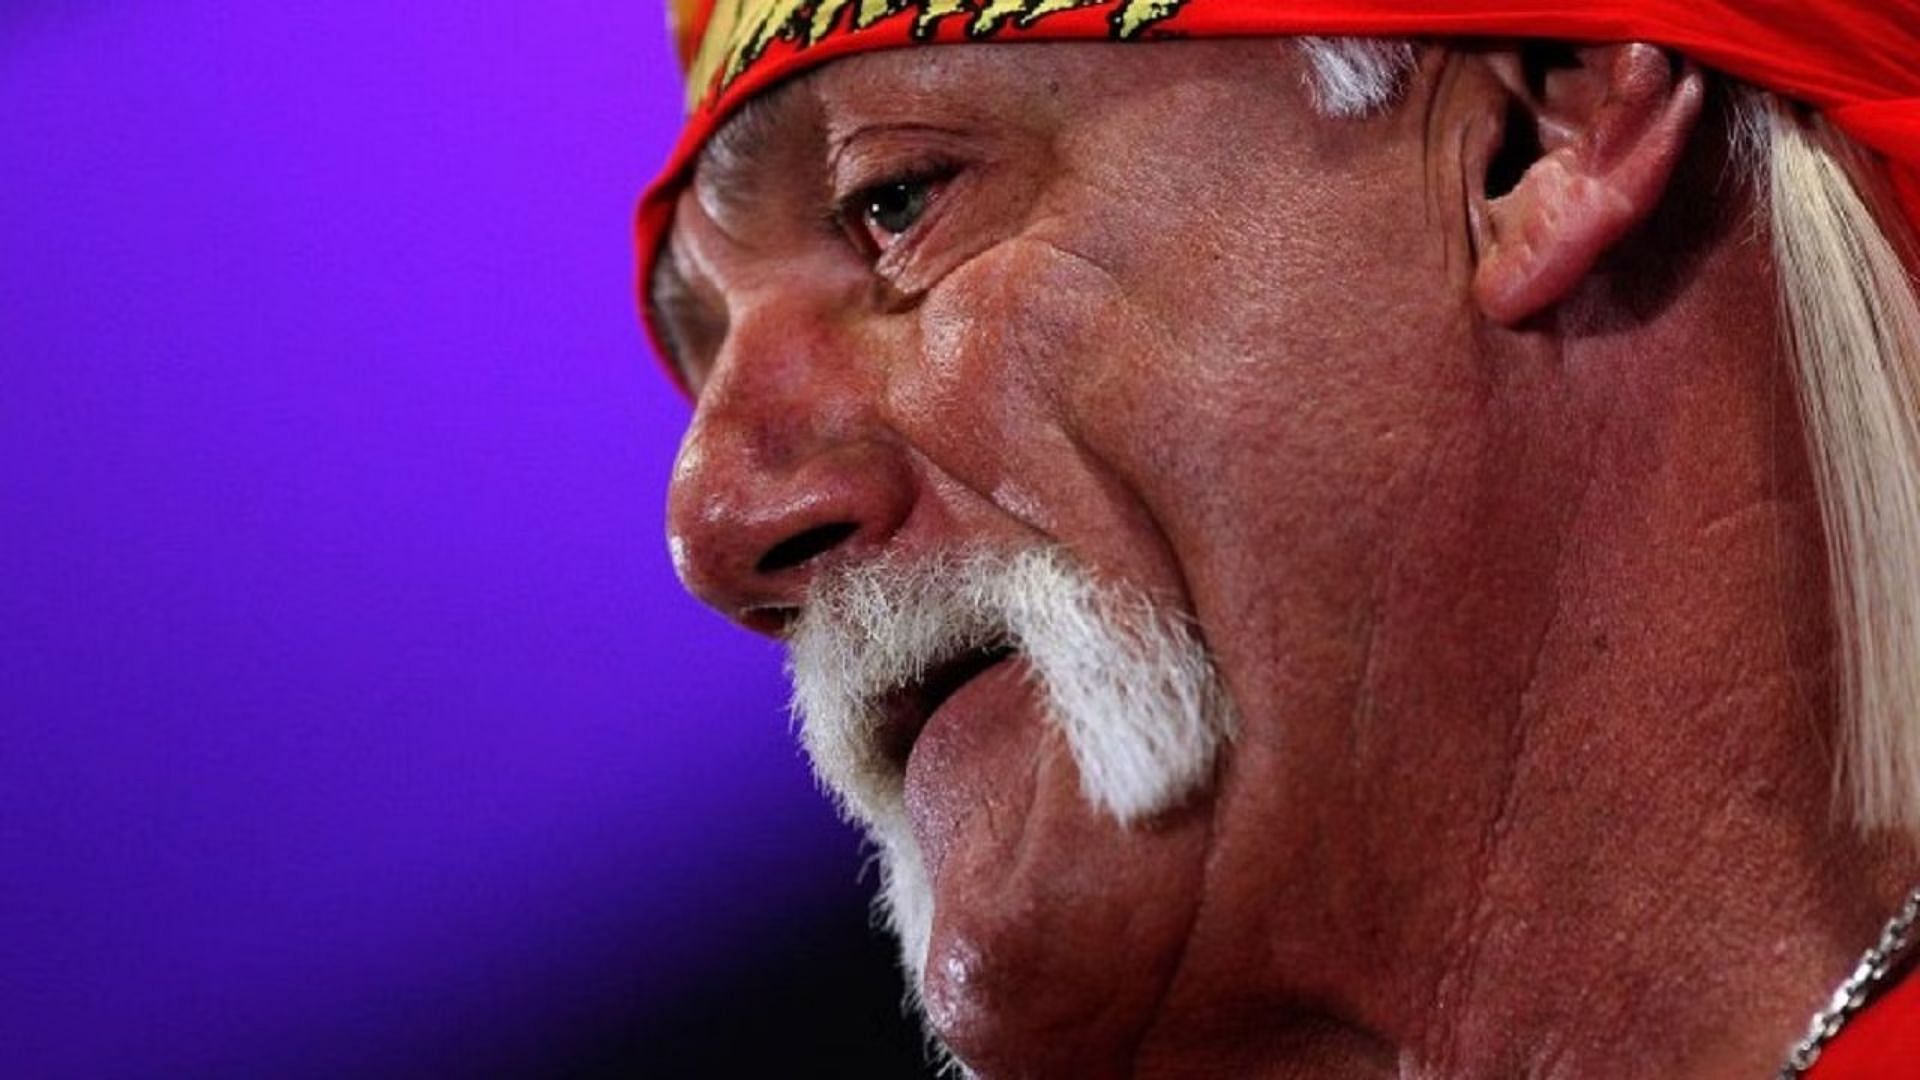 Hulk Hogan has certainly not had it easy